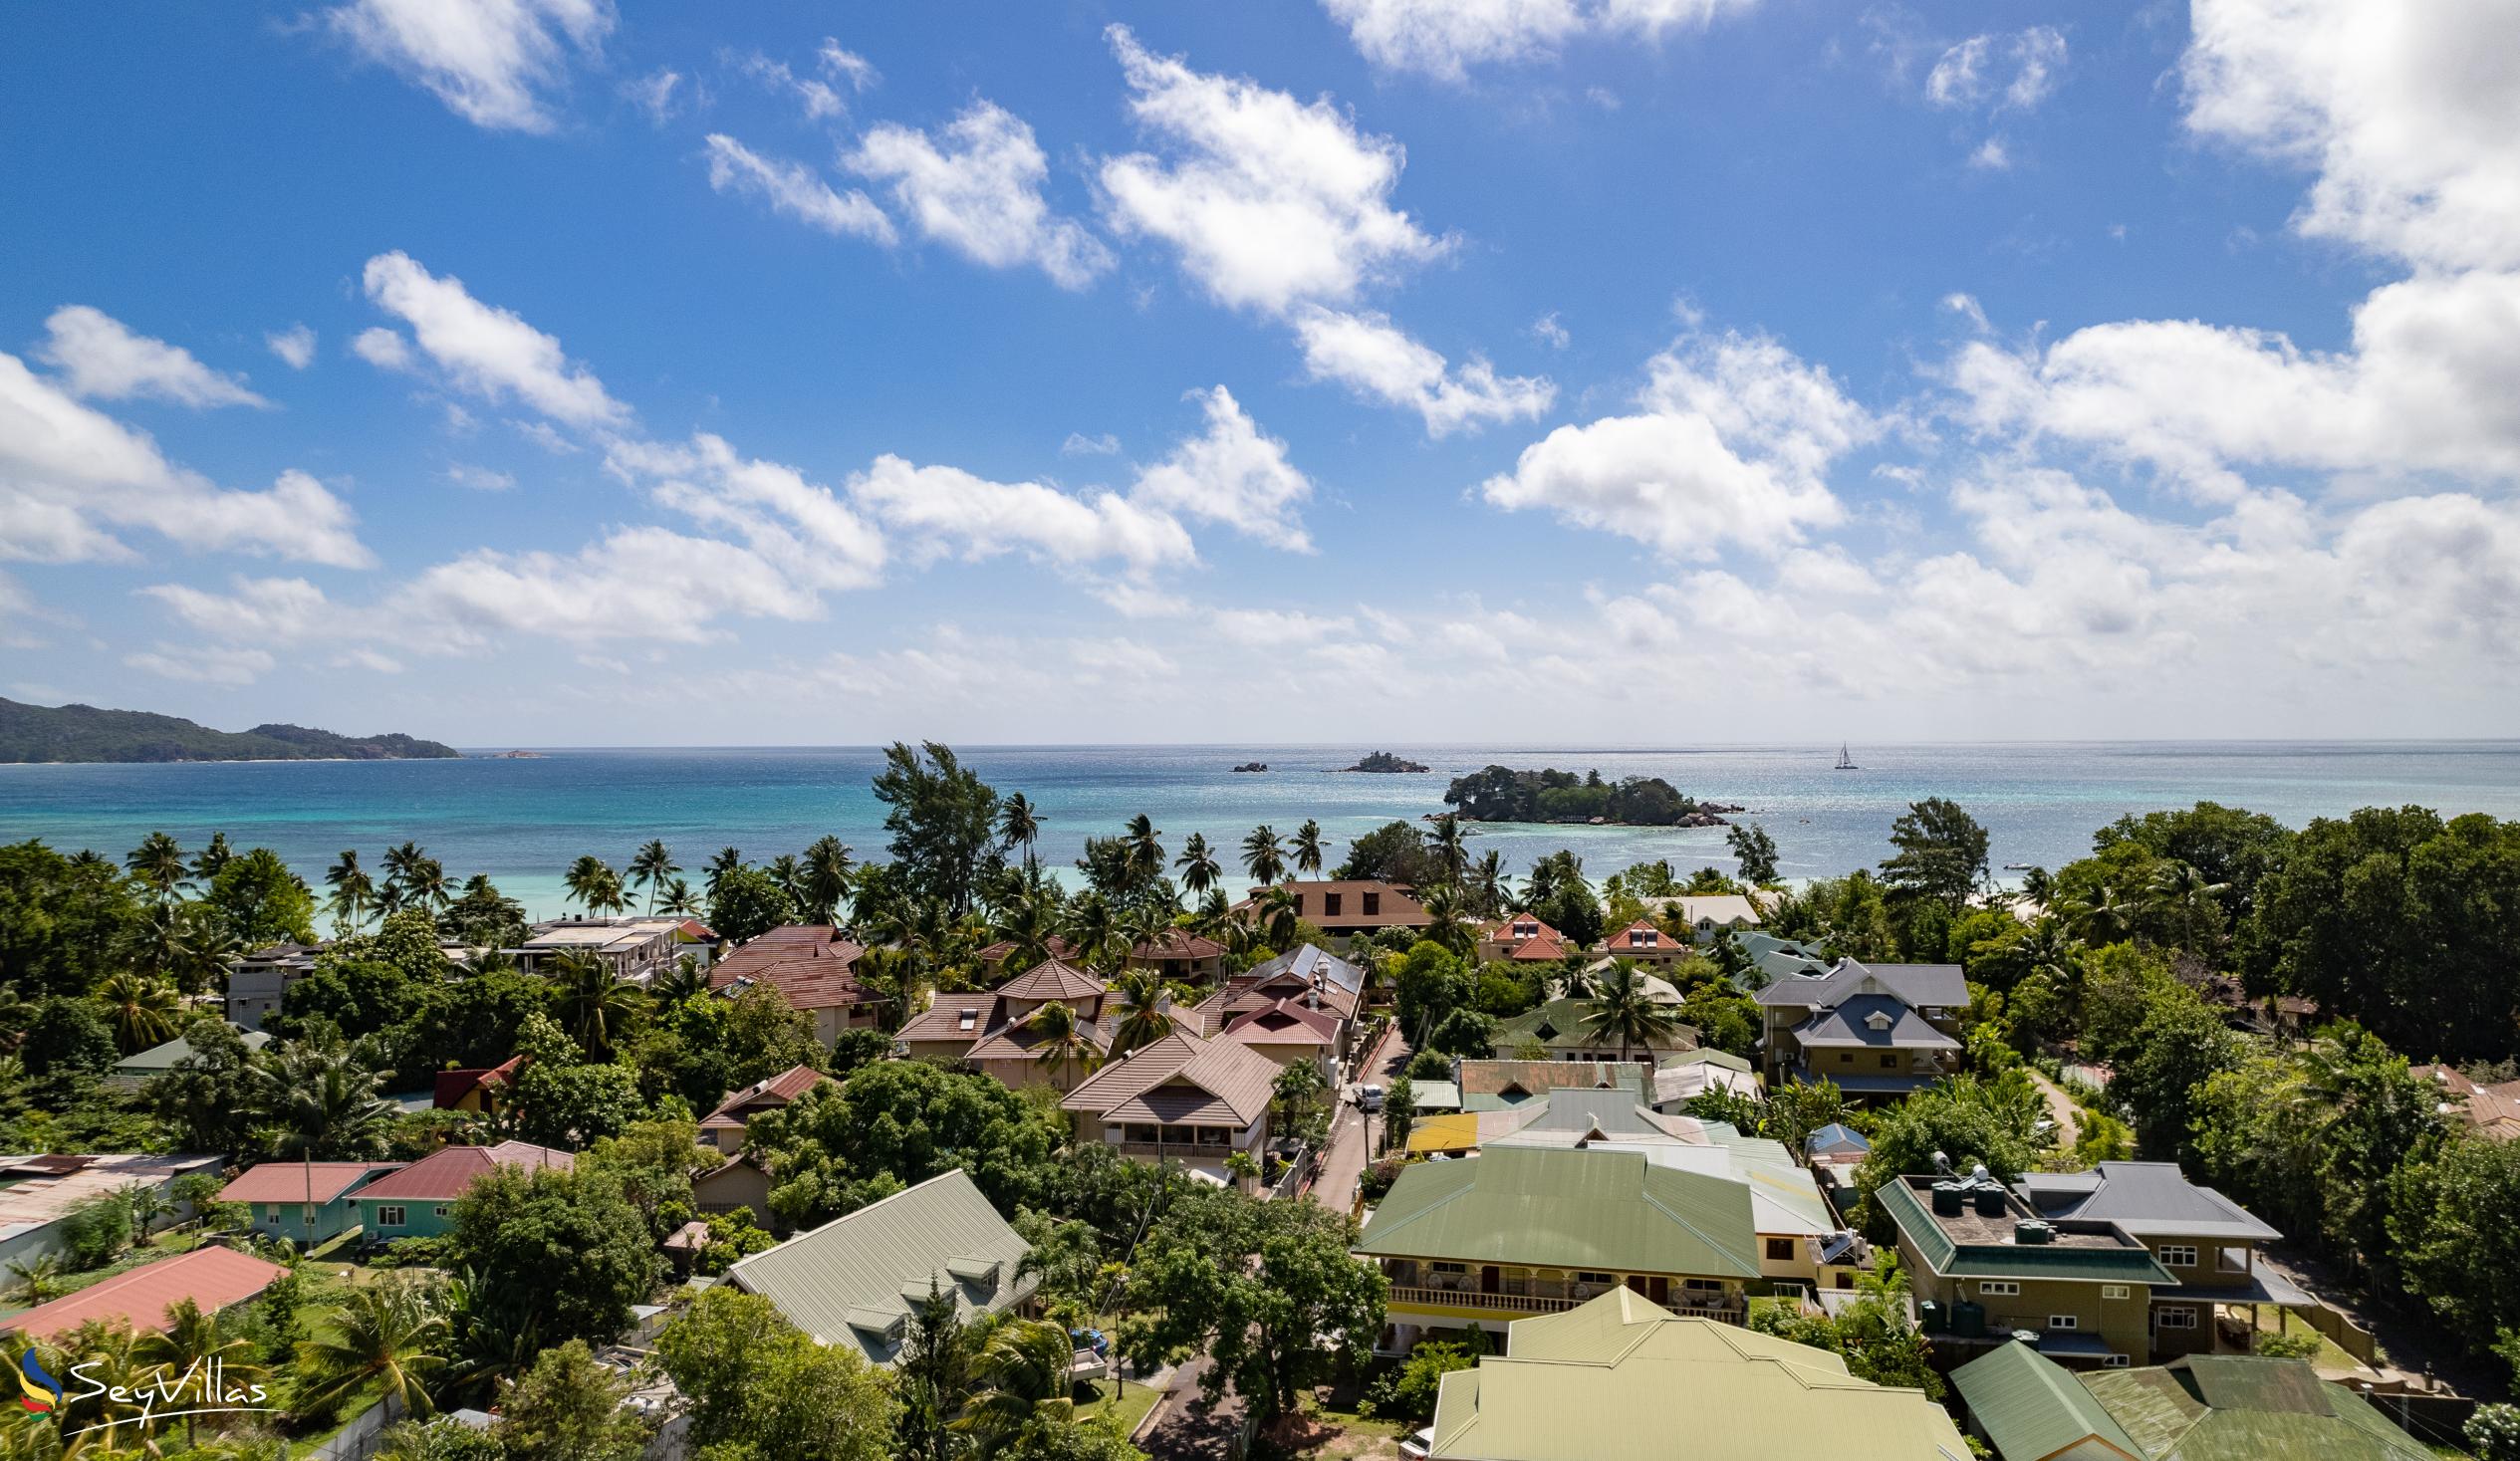 Foto 11: Myra's Self Catering Apartment - Posizione - Praslin (Seychelles)